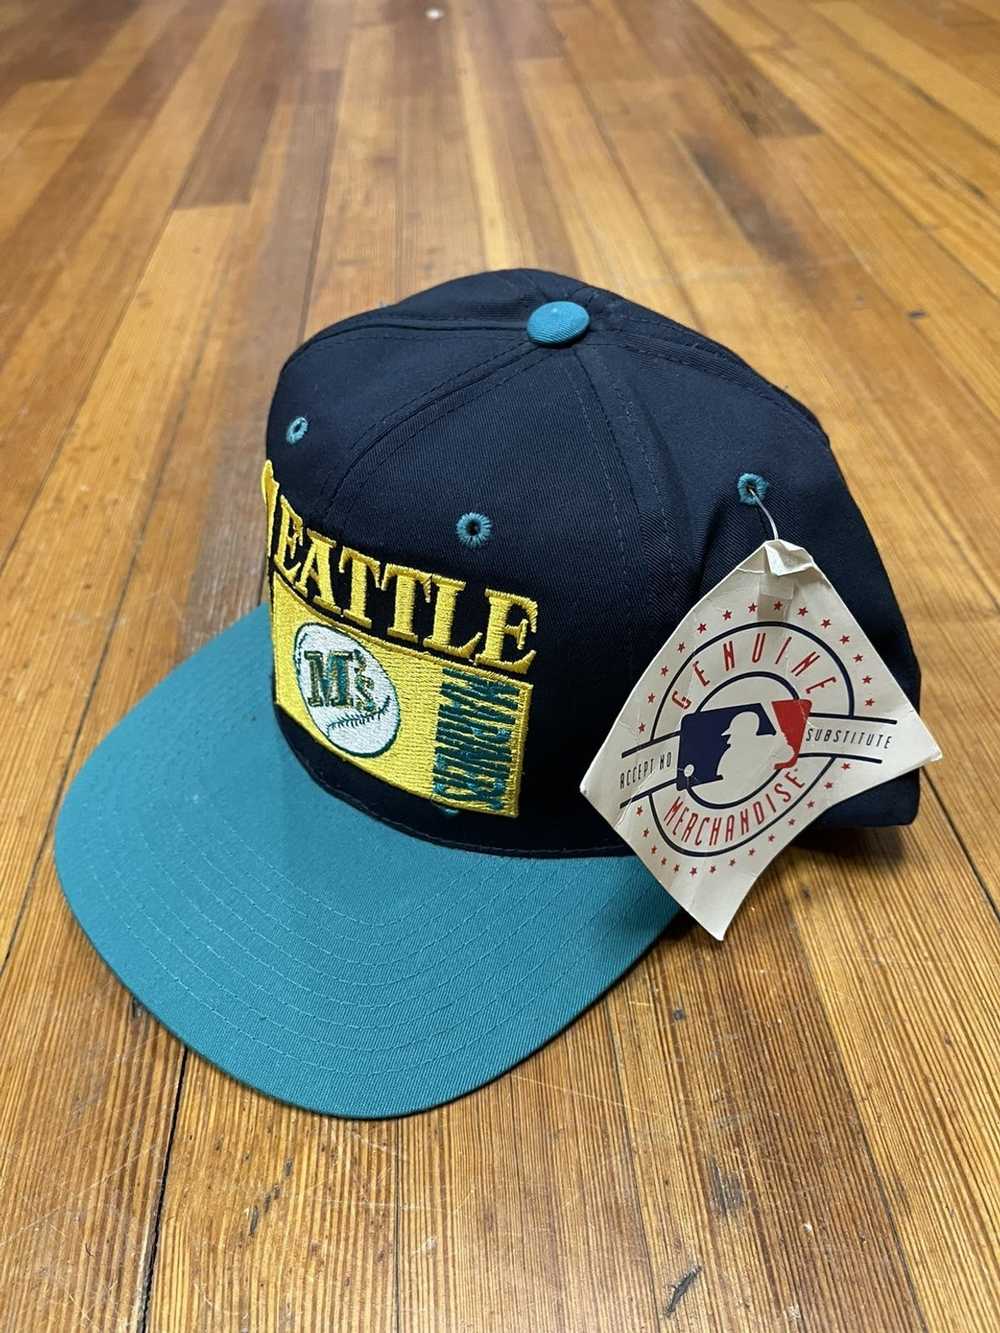 Vintage LA Dodgers Drew Pearson Chalk Line Hat for Sale in Chula